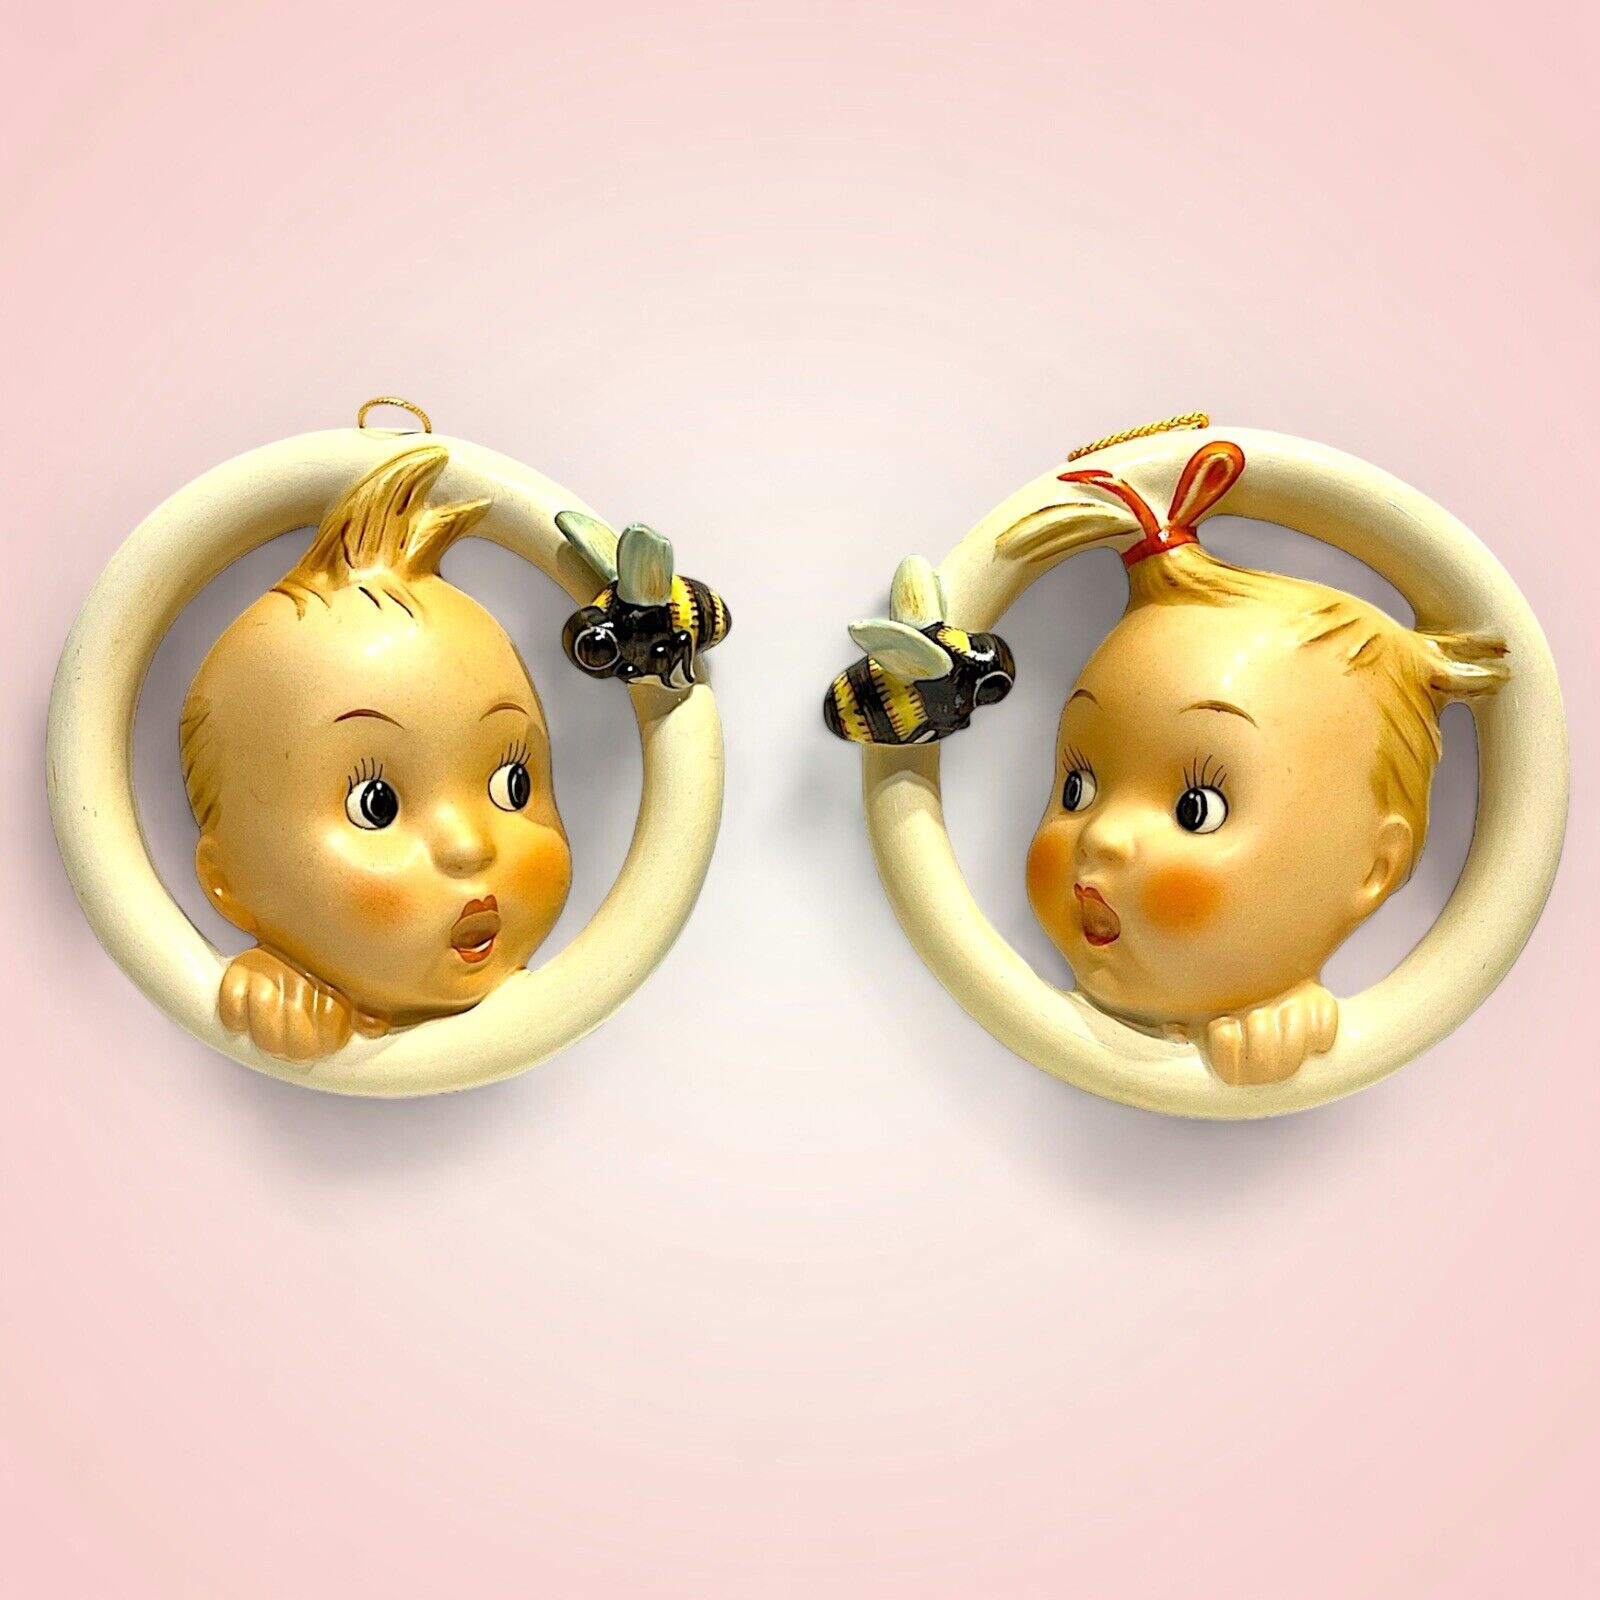 Goebel HUMMEL “Ba Bee” BOY & GIRL Nursery Wall Plaques Set #30/0A #30/0B Jg86